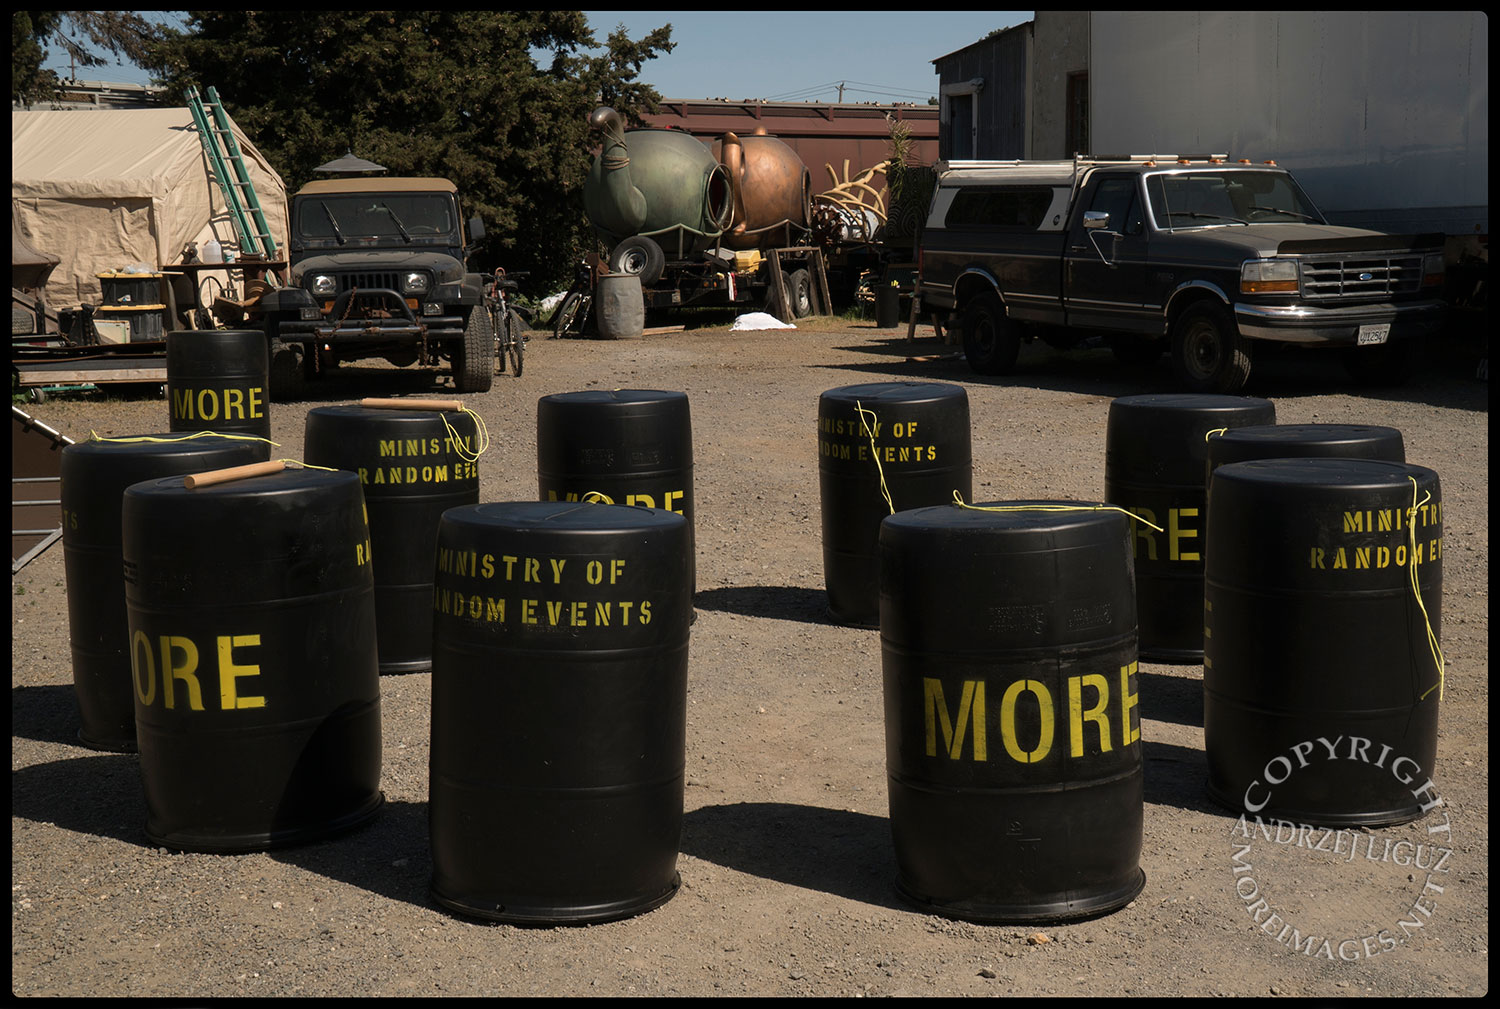 Half of the MORE (Ministry Of Random Events) Drums, Scotty's Warehouse, Petaluma, CA 2015-04-01